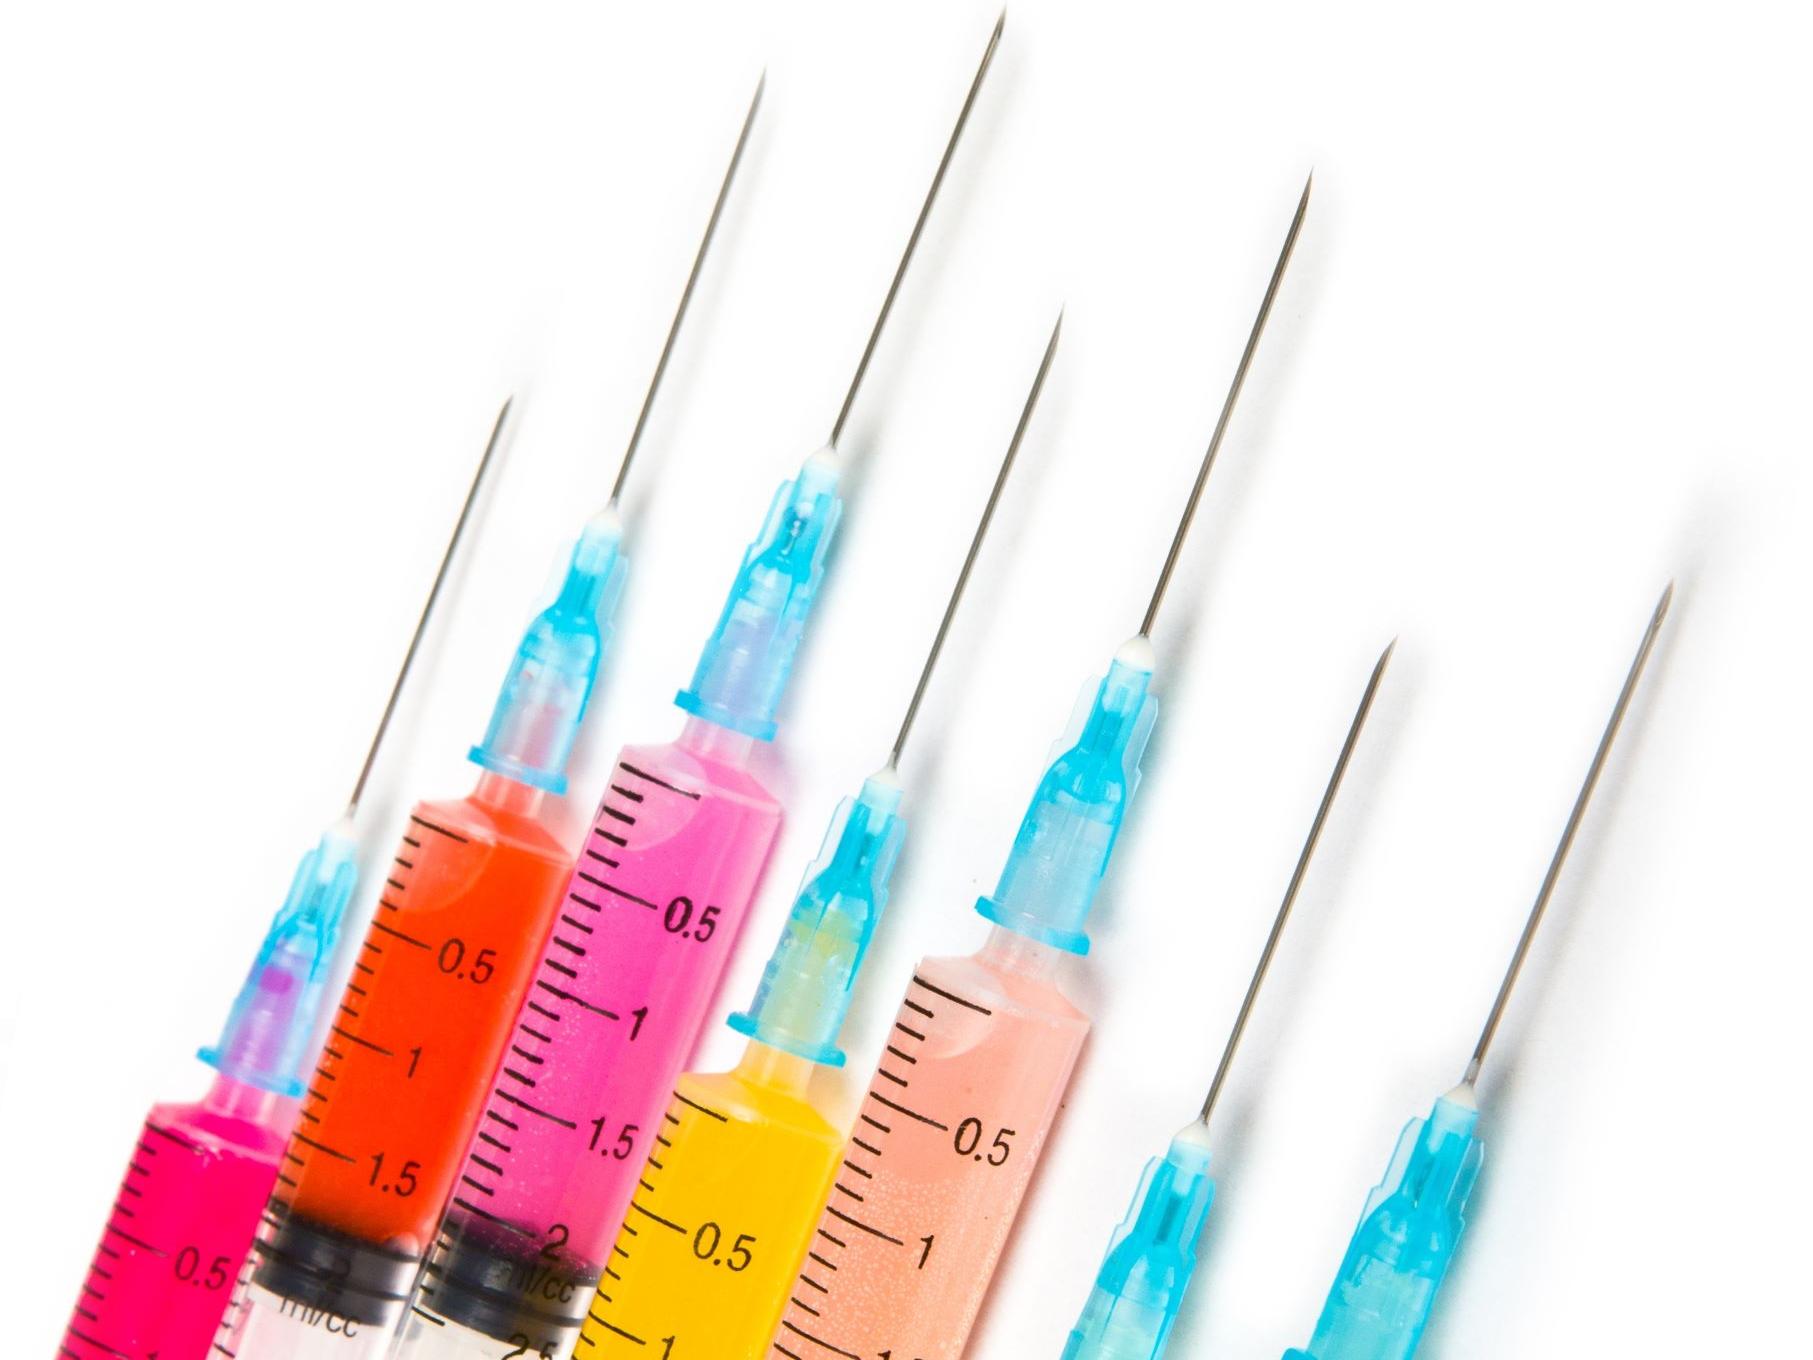 A point well made on syringe needle bonding